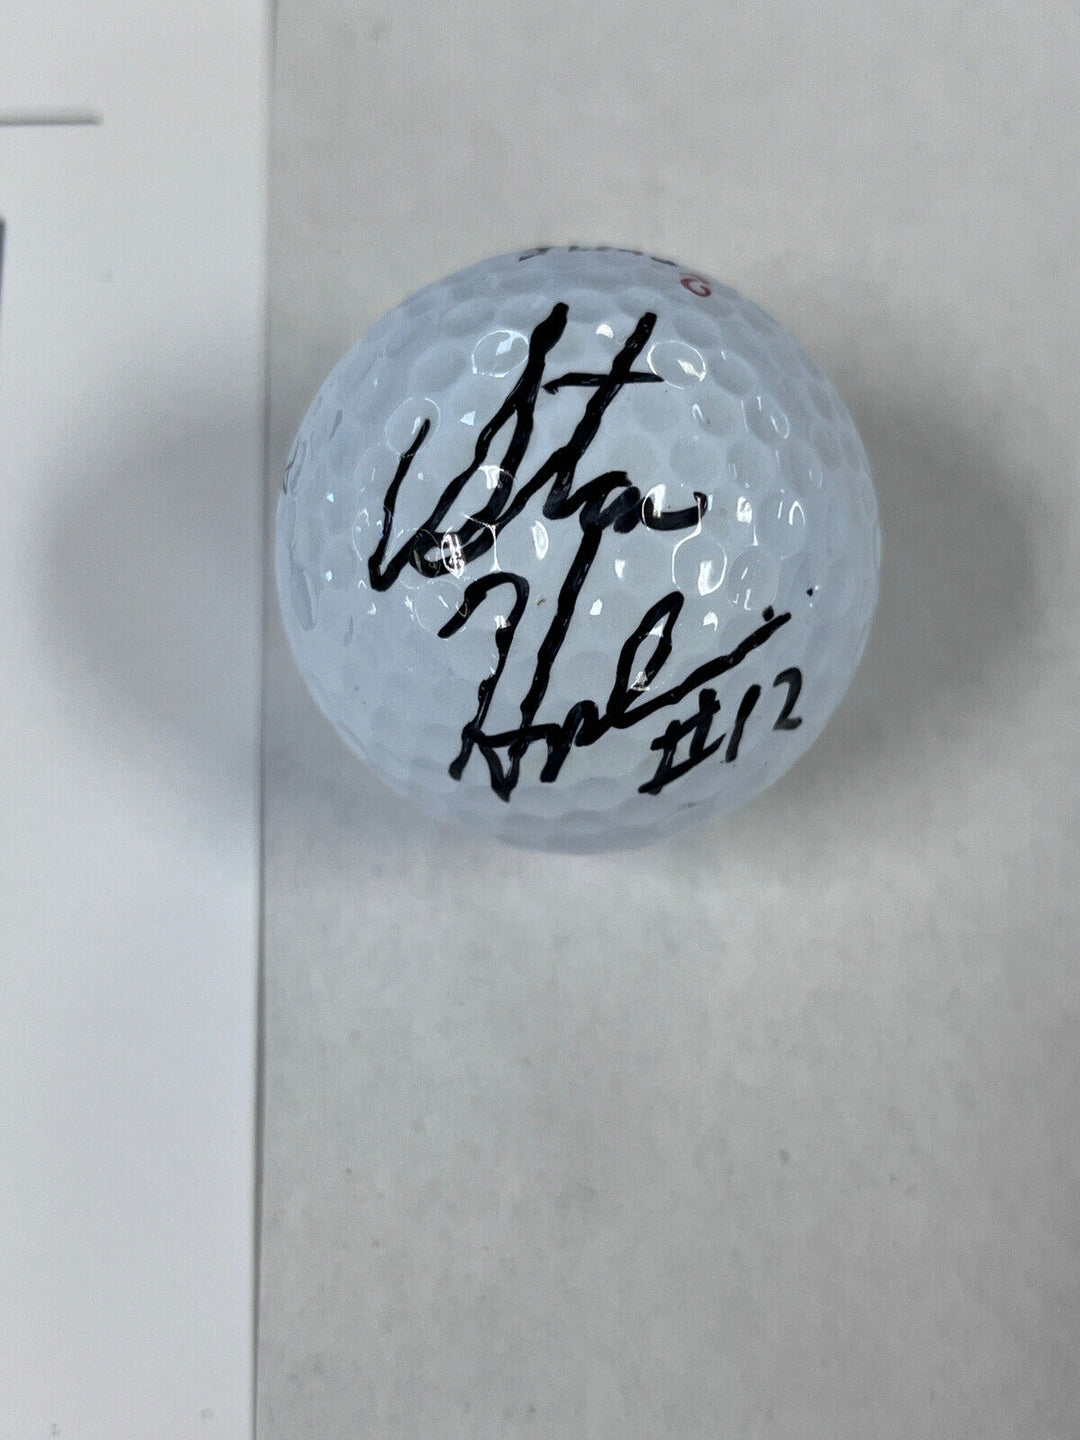 Stan Humphries Autographed Signed Golf Ball W/Cube Beckett LOA NFL Washington